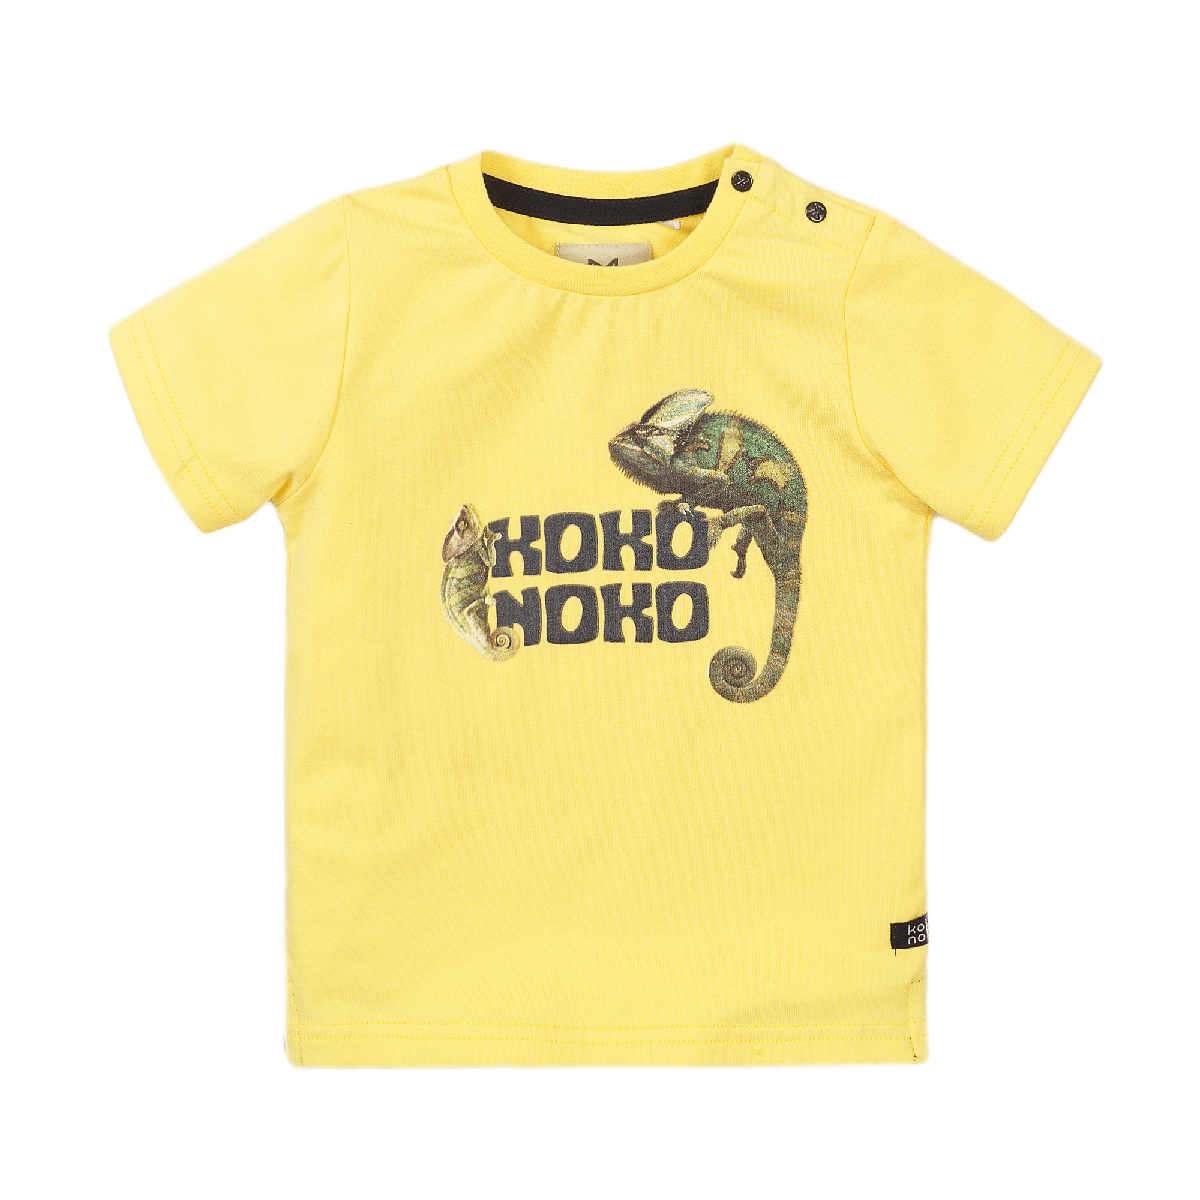 Koko Noko T-shirt kameleon